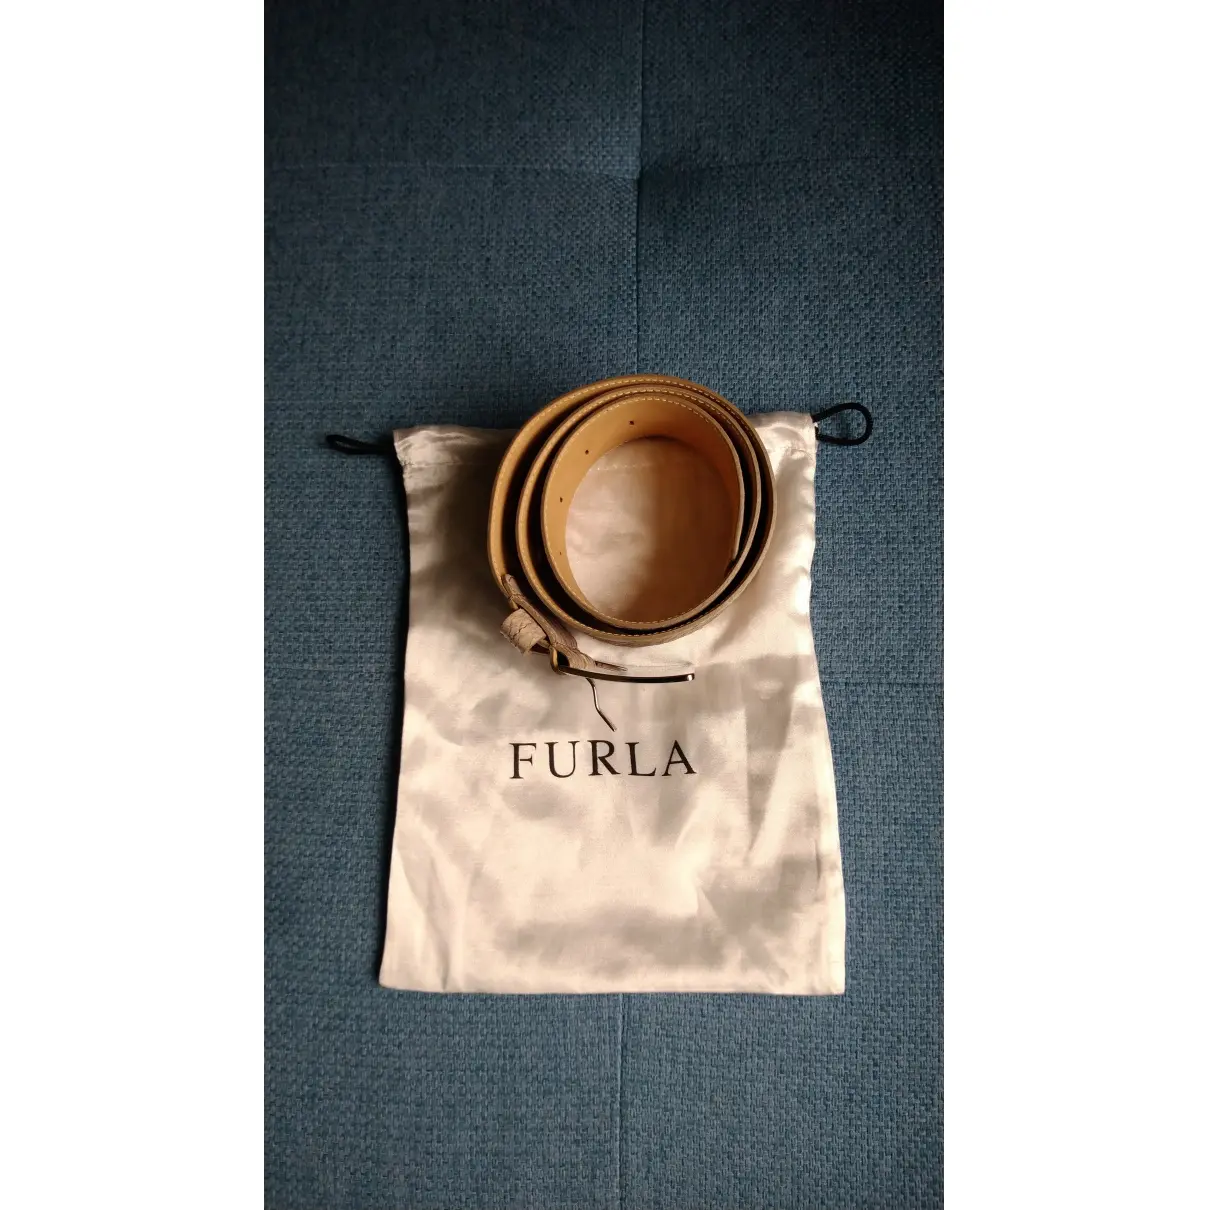 Buy Furla Leather belt online